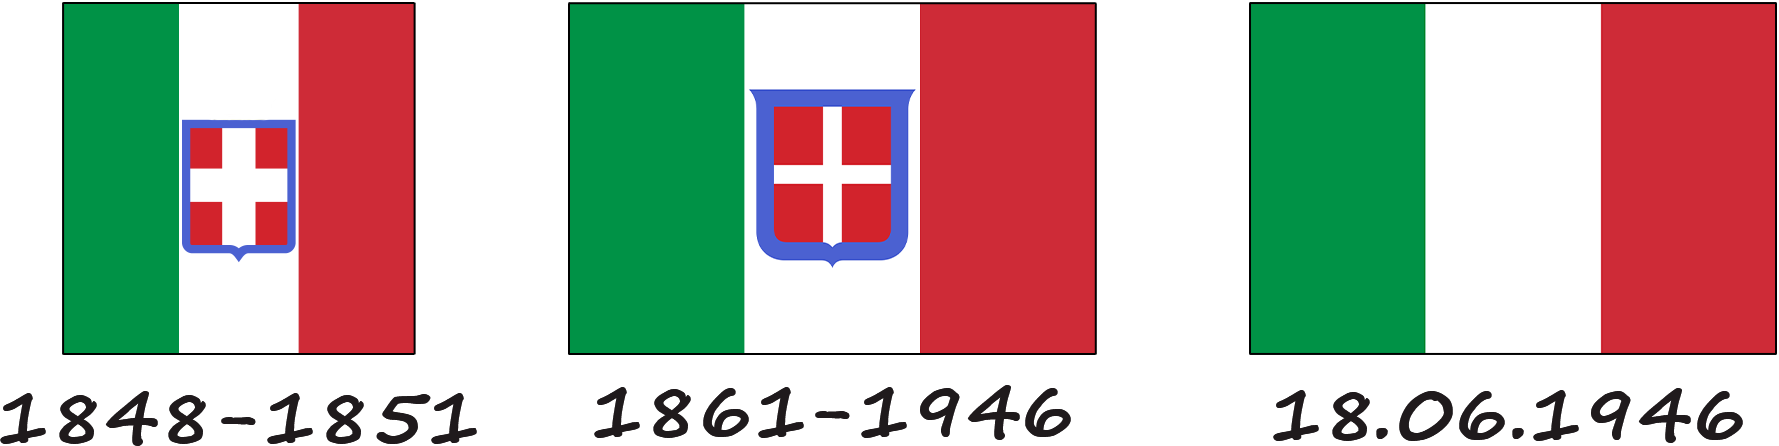 Historia de la bandera italiana